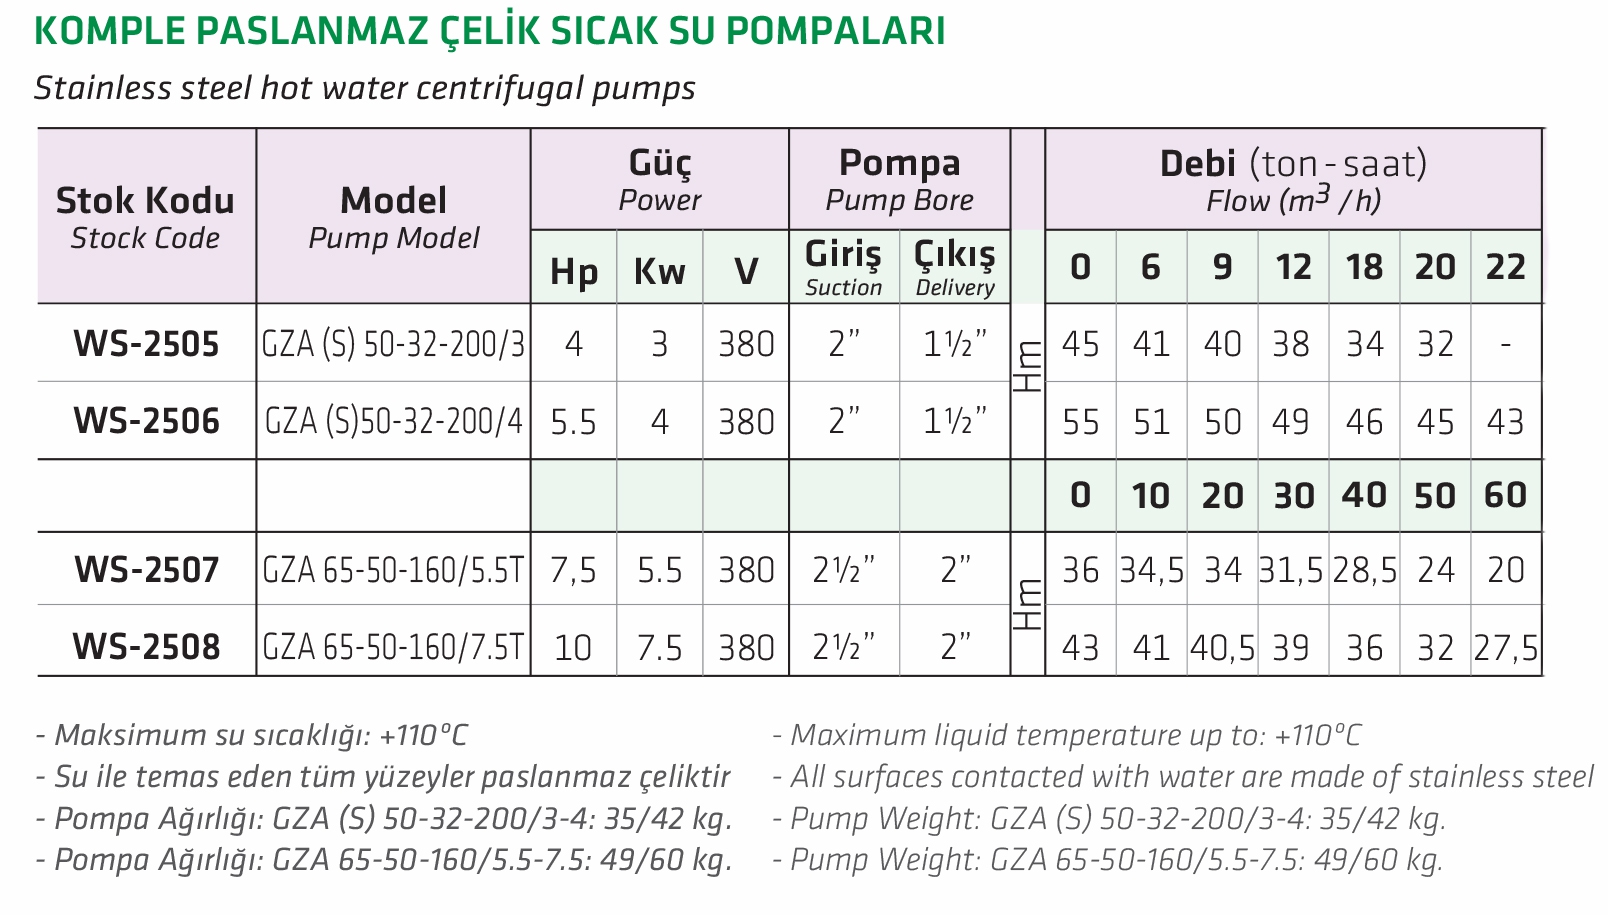 Water Sound GZA (S) 50-32-200/3 4 HP Komple Paslanmaz Çelik Sıcak Su Pompa